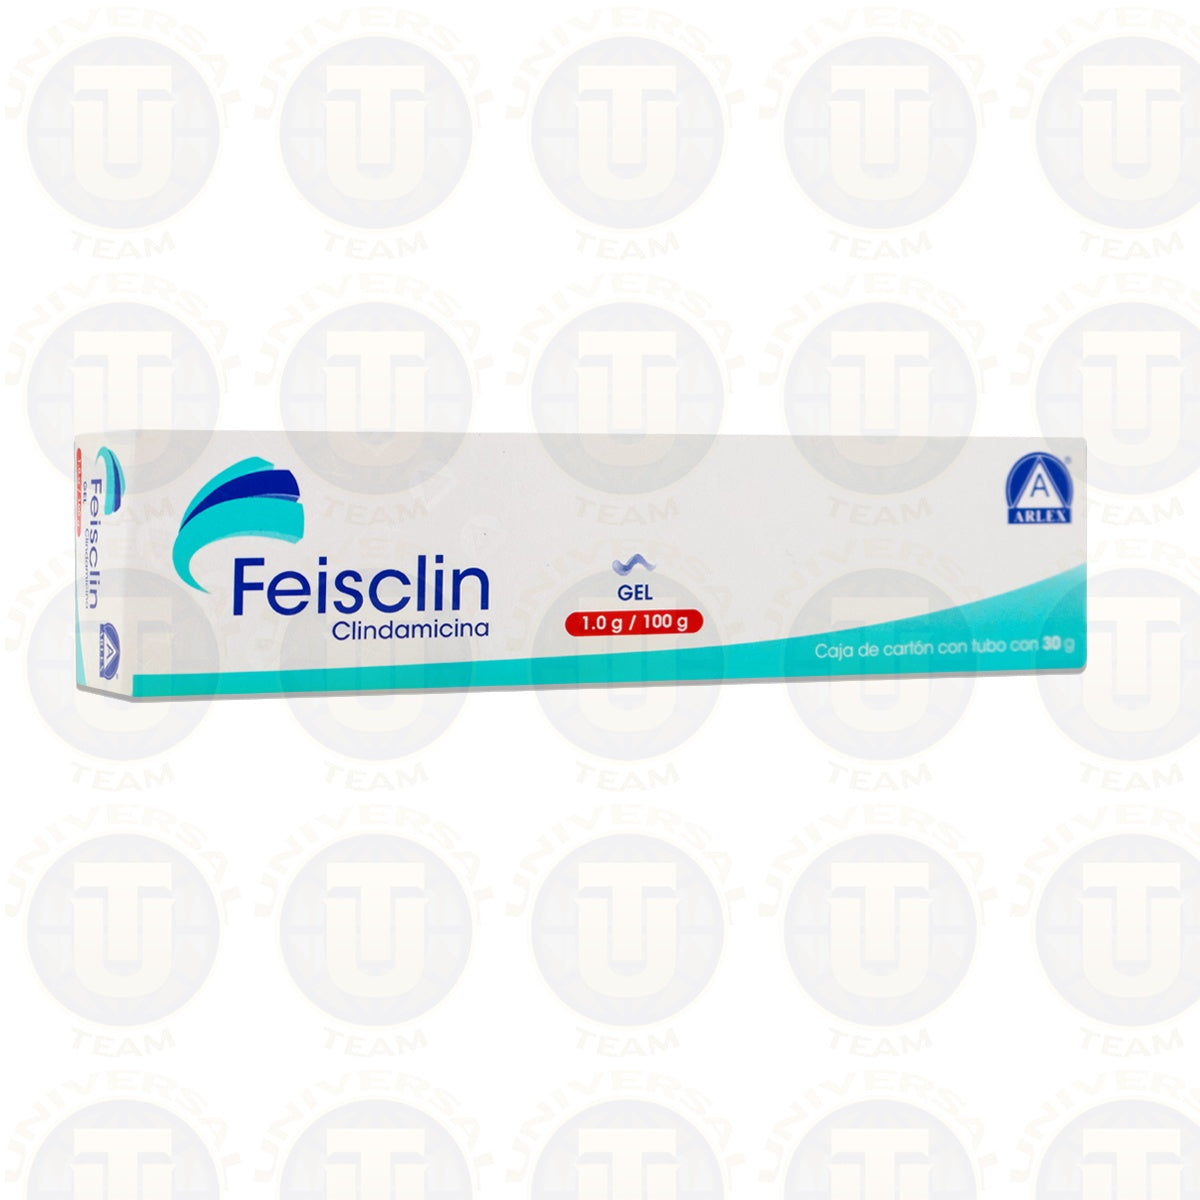 Feisclin Clindamicina Gel 1.0G/100G Arlex Tubo 30G